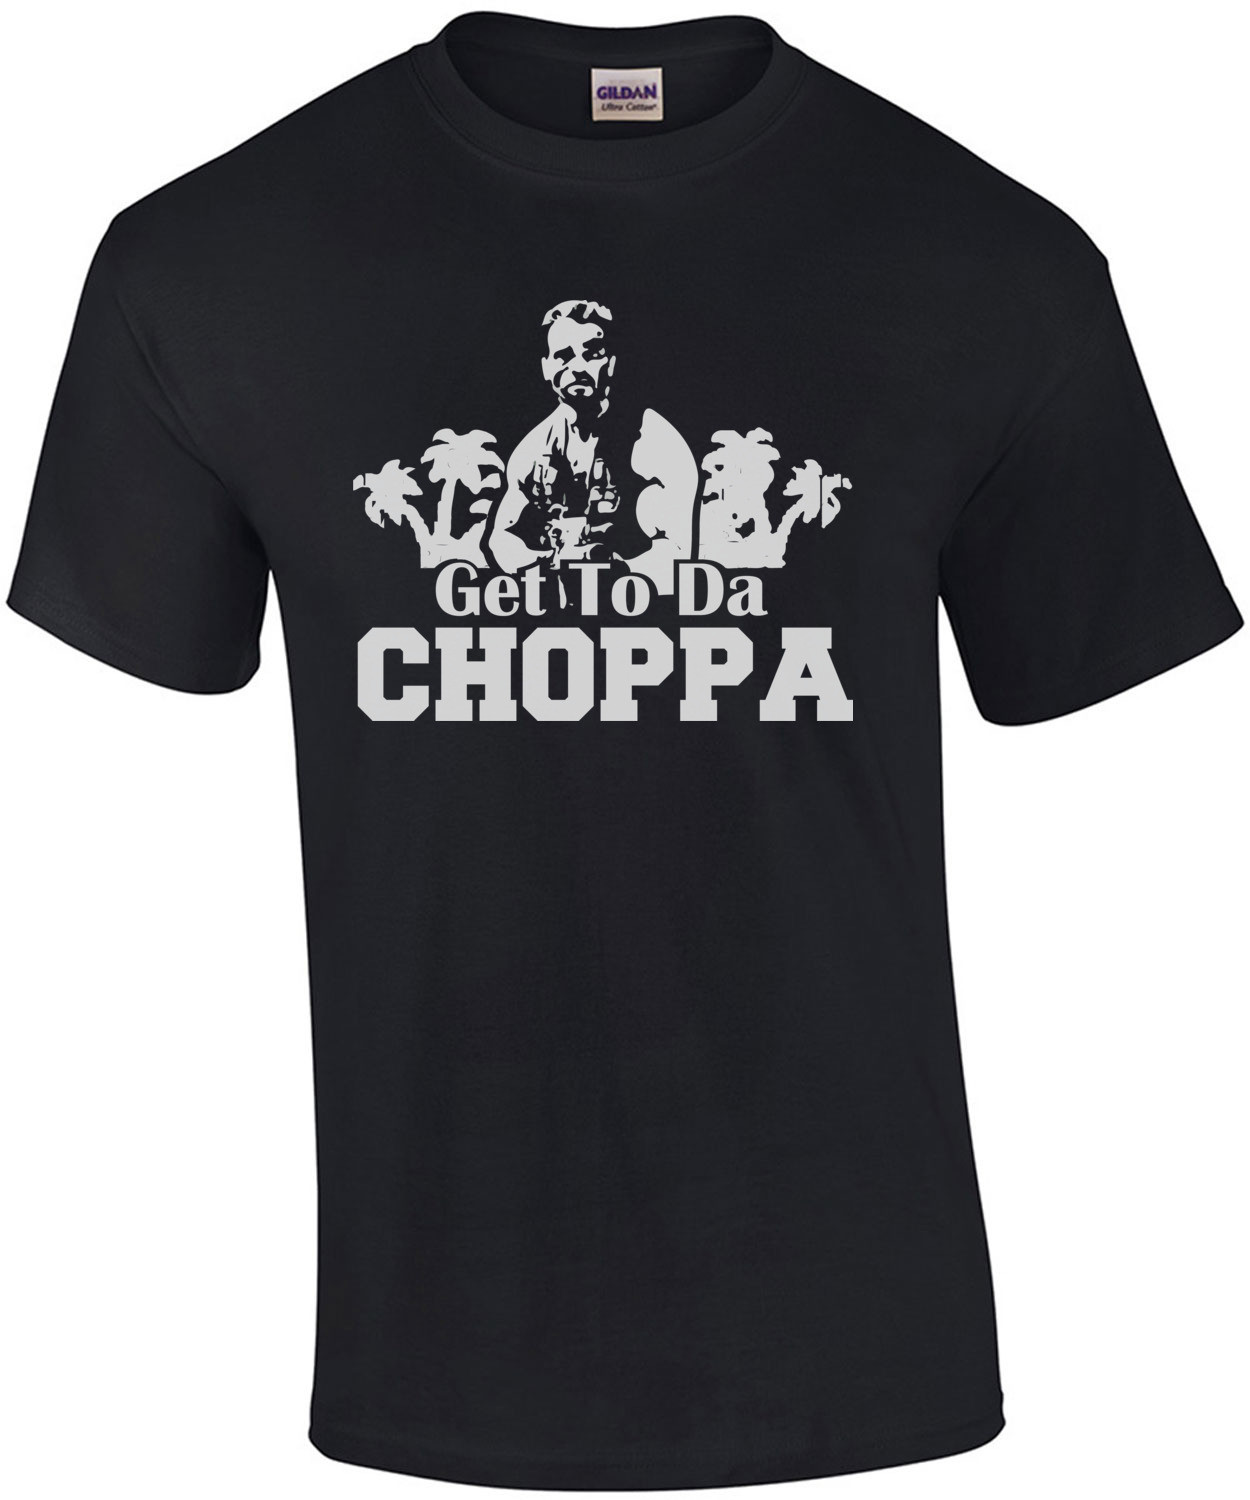 Get to da choppa - Arnold Schwarzenegger shirt - predator t-shirt